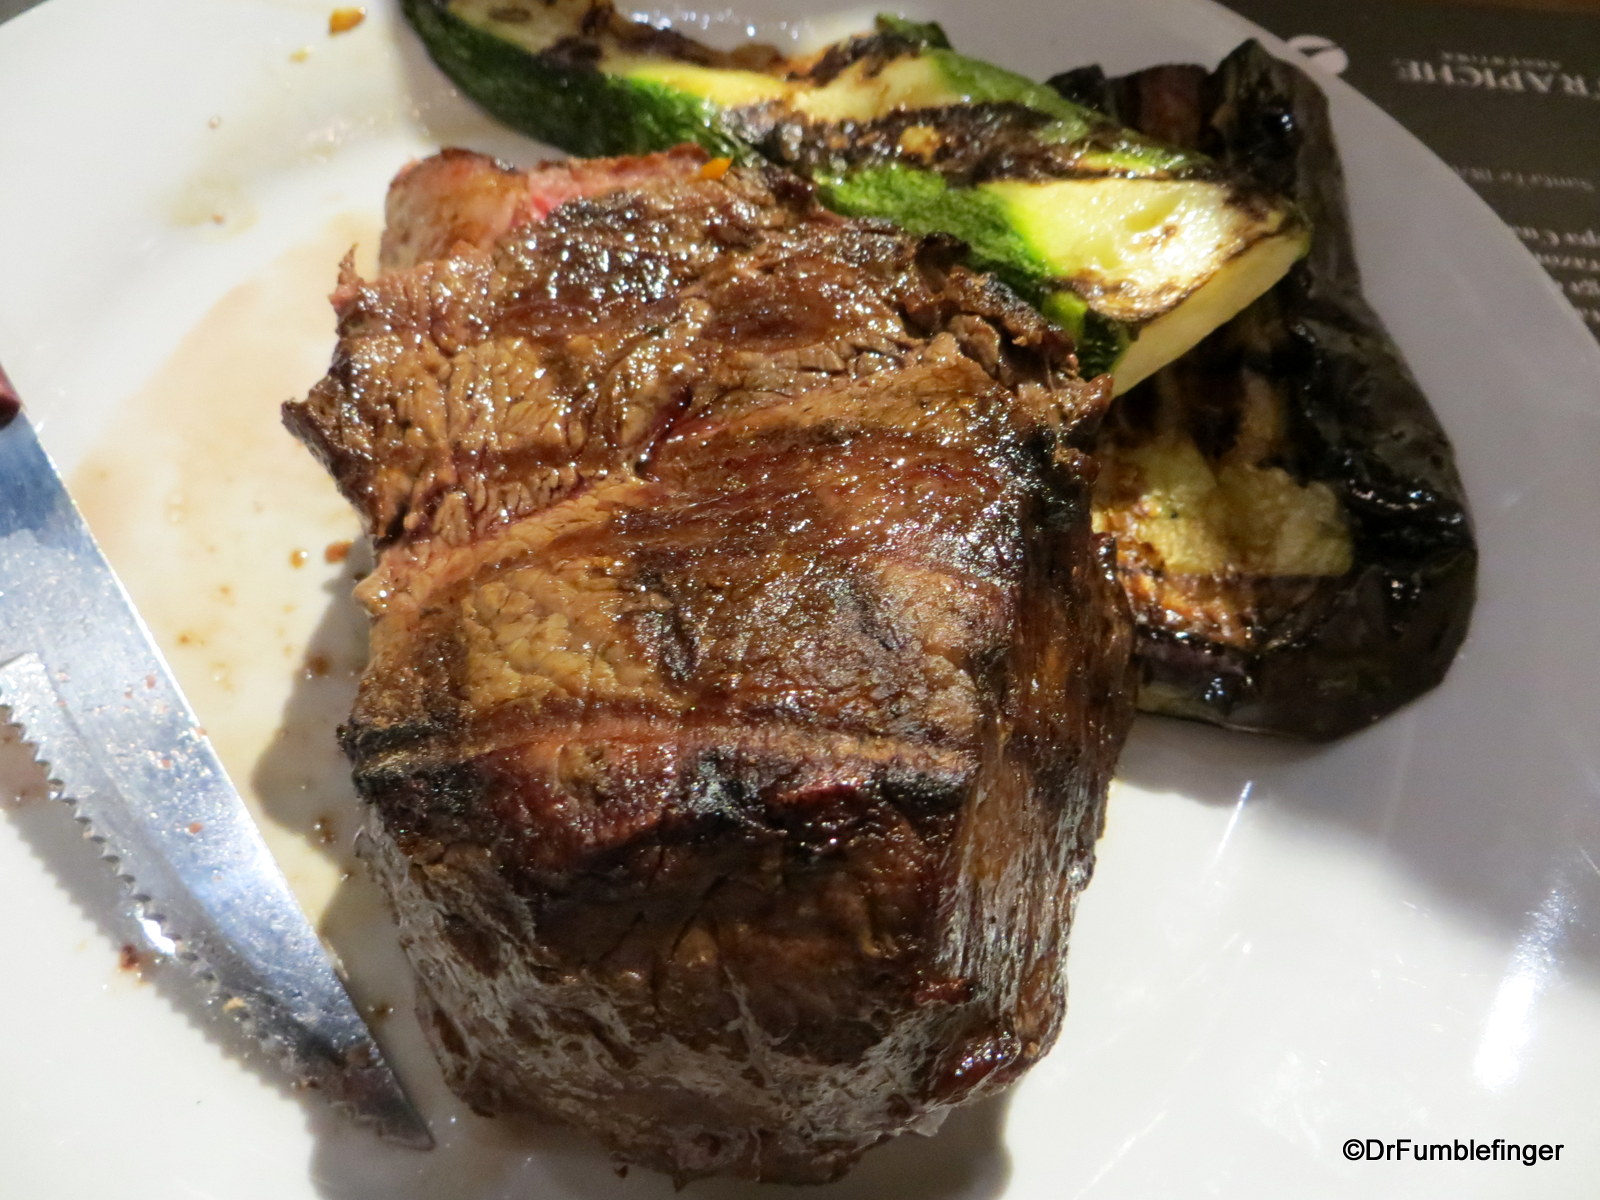 Grilled New York Steak, medium rare